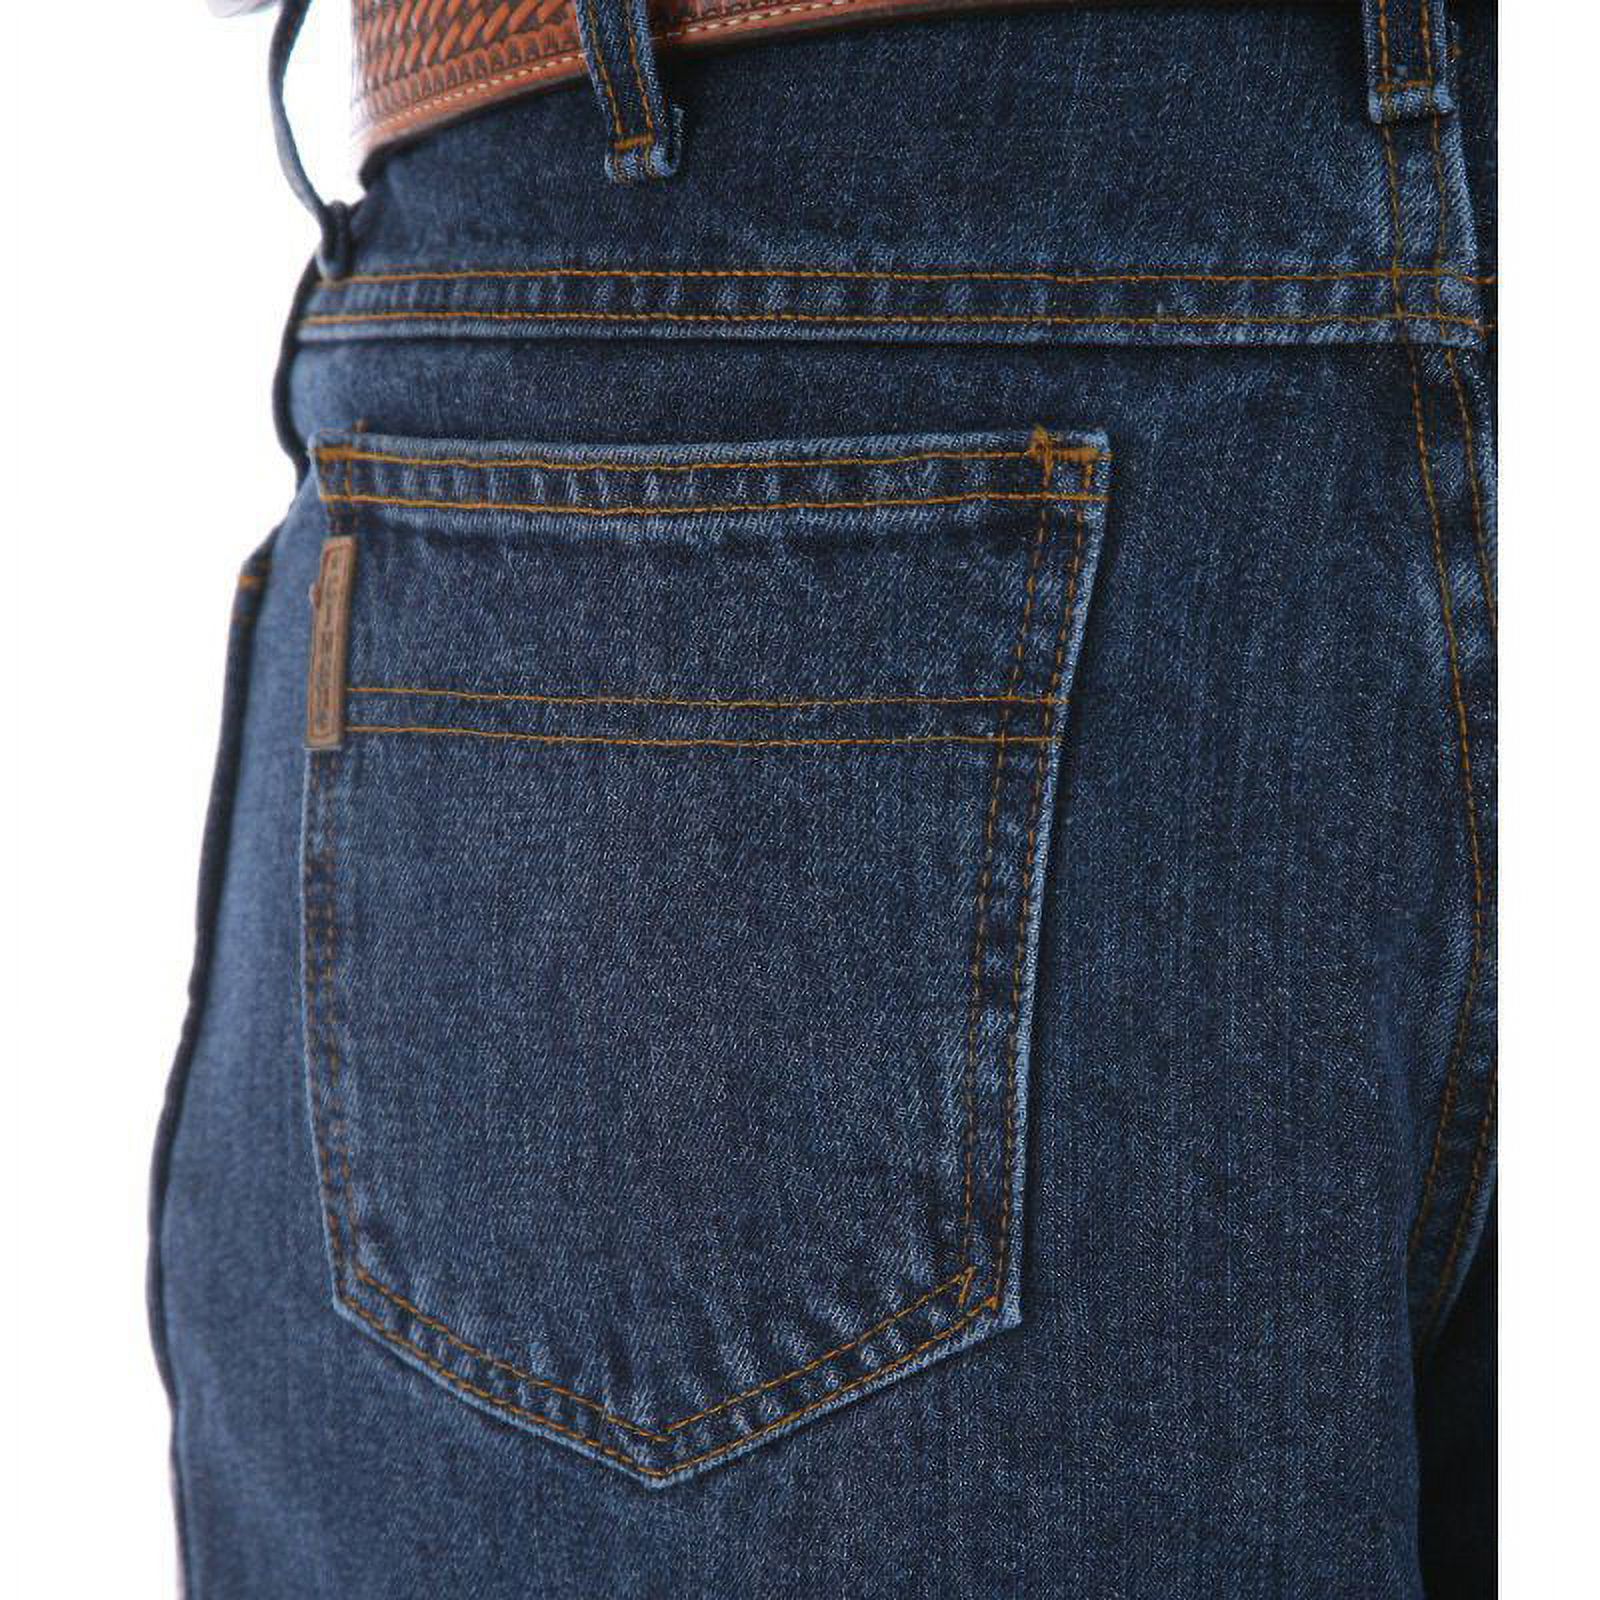 Cinch Apparel Mens Green Label Original Fit Jeans 34x30 Dark Stonewash - image 3 of 4